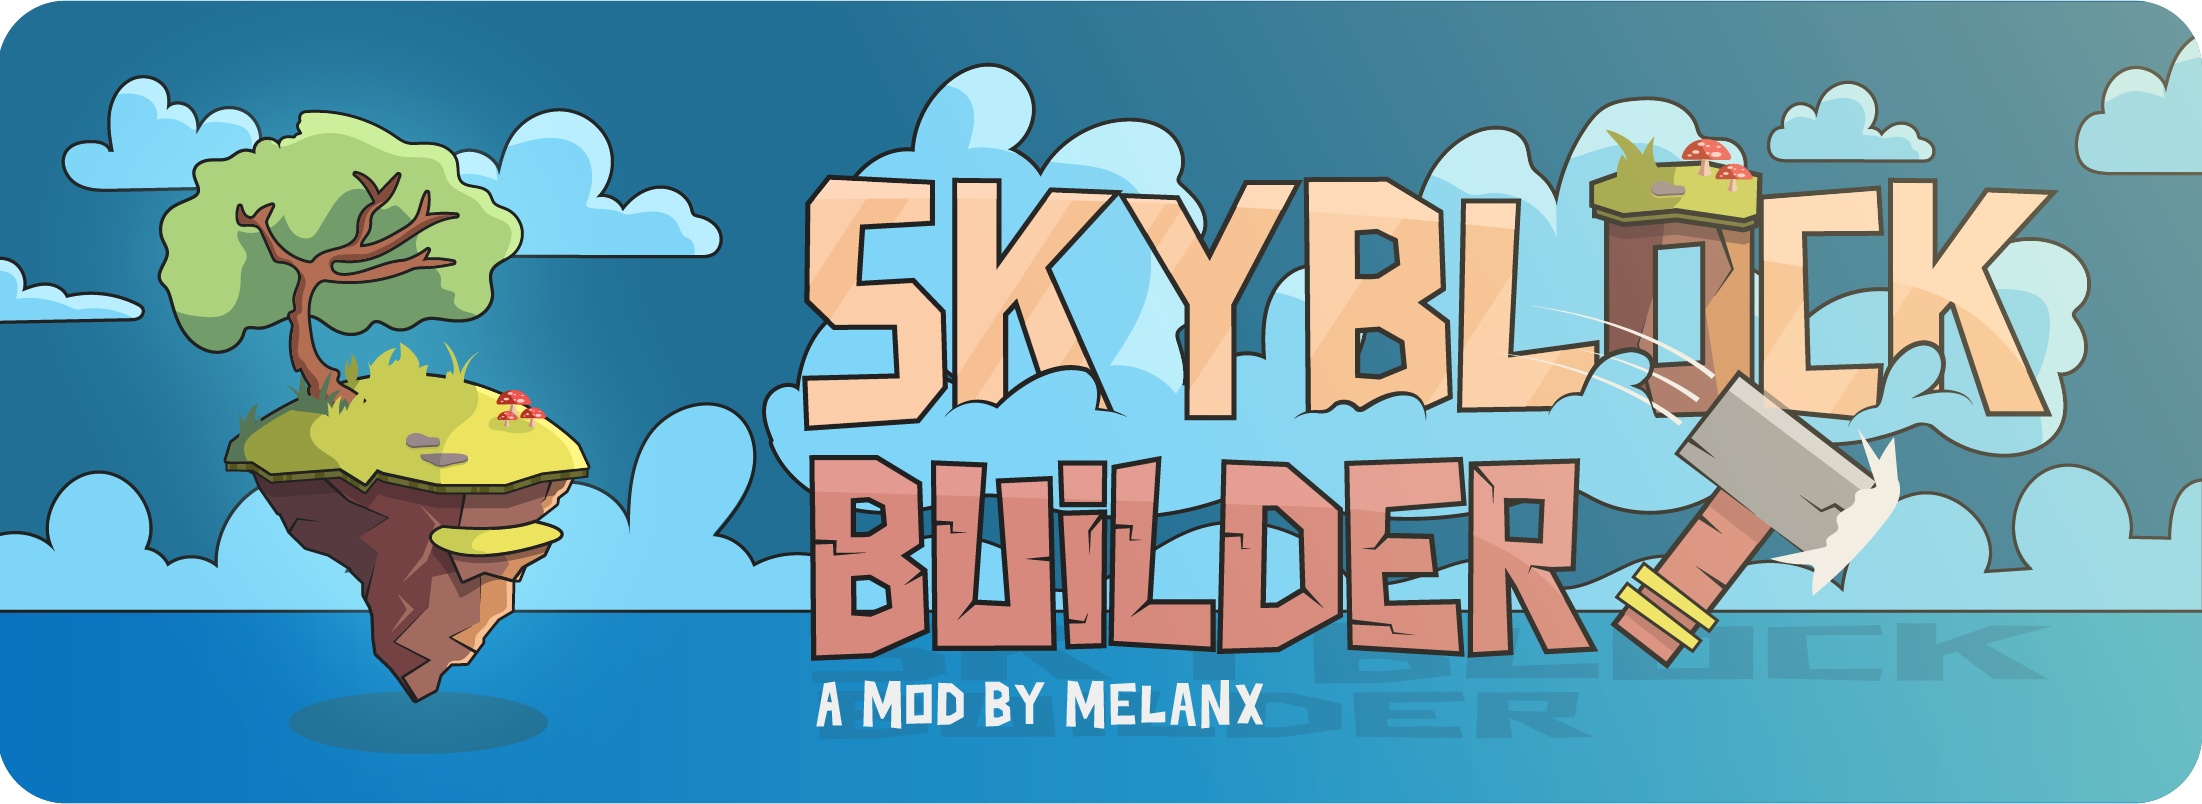 Skyblock Builder screenshot 1